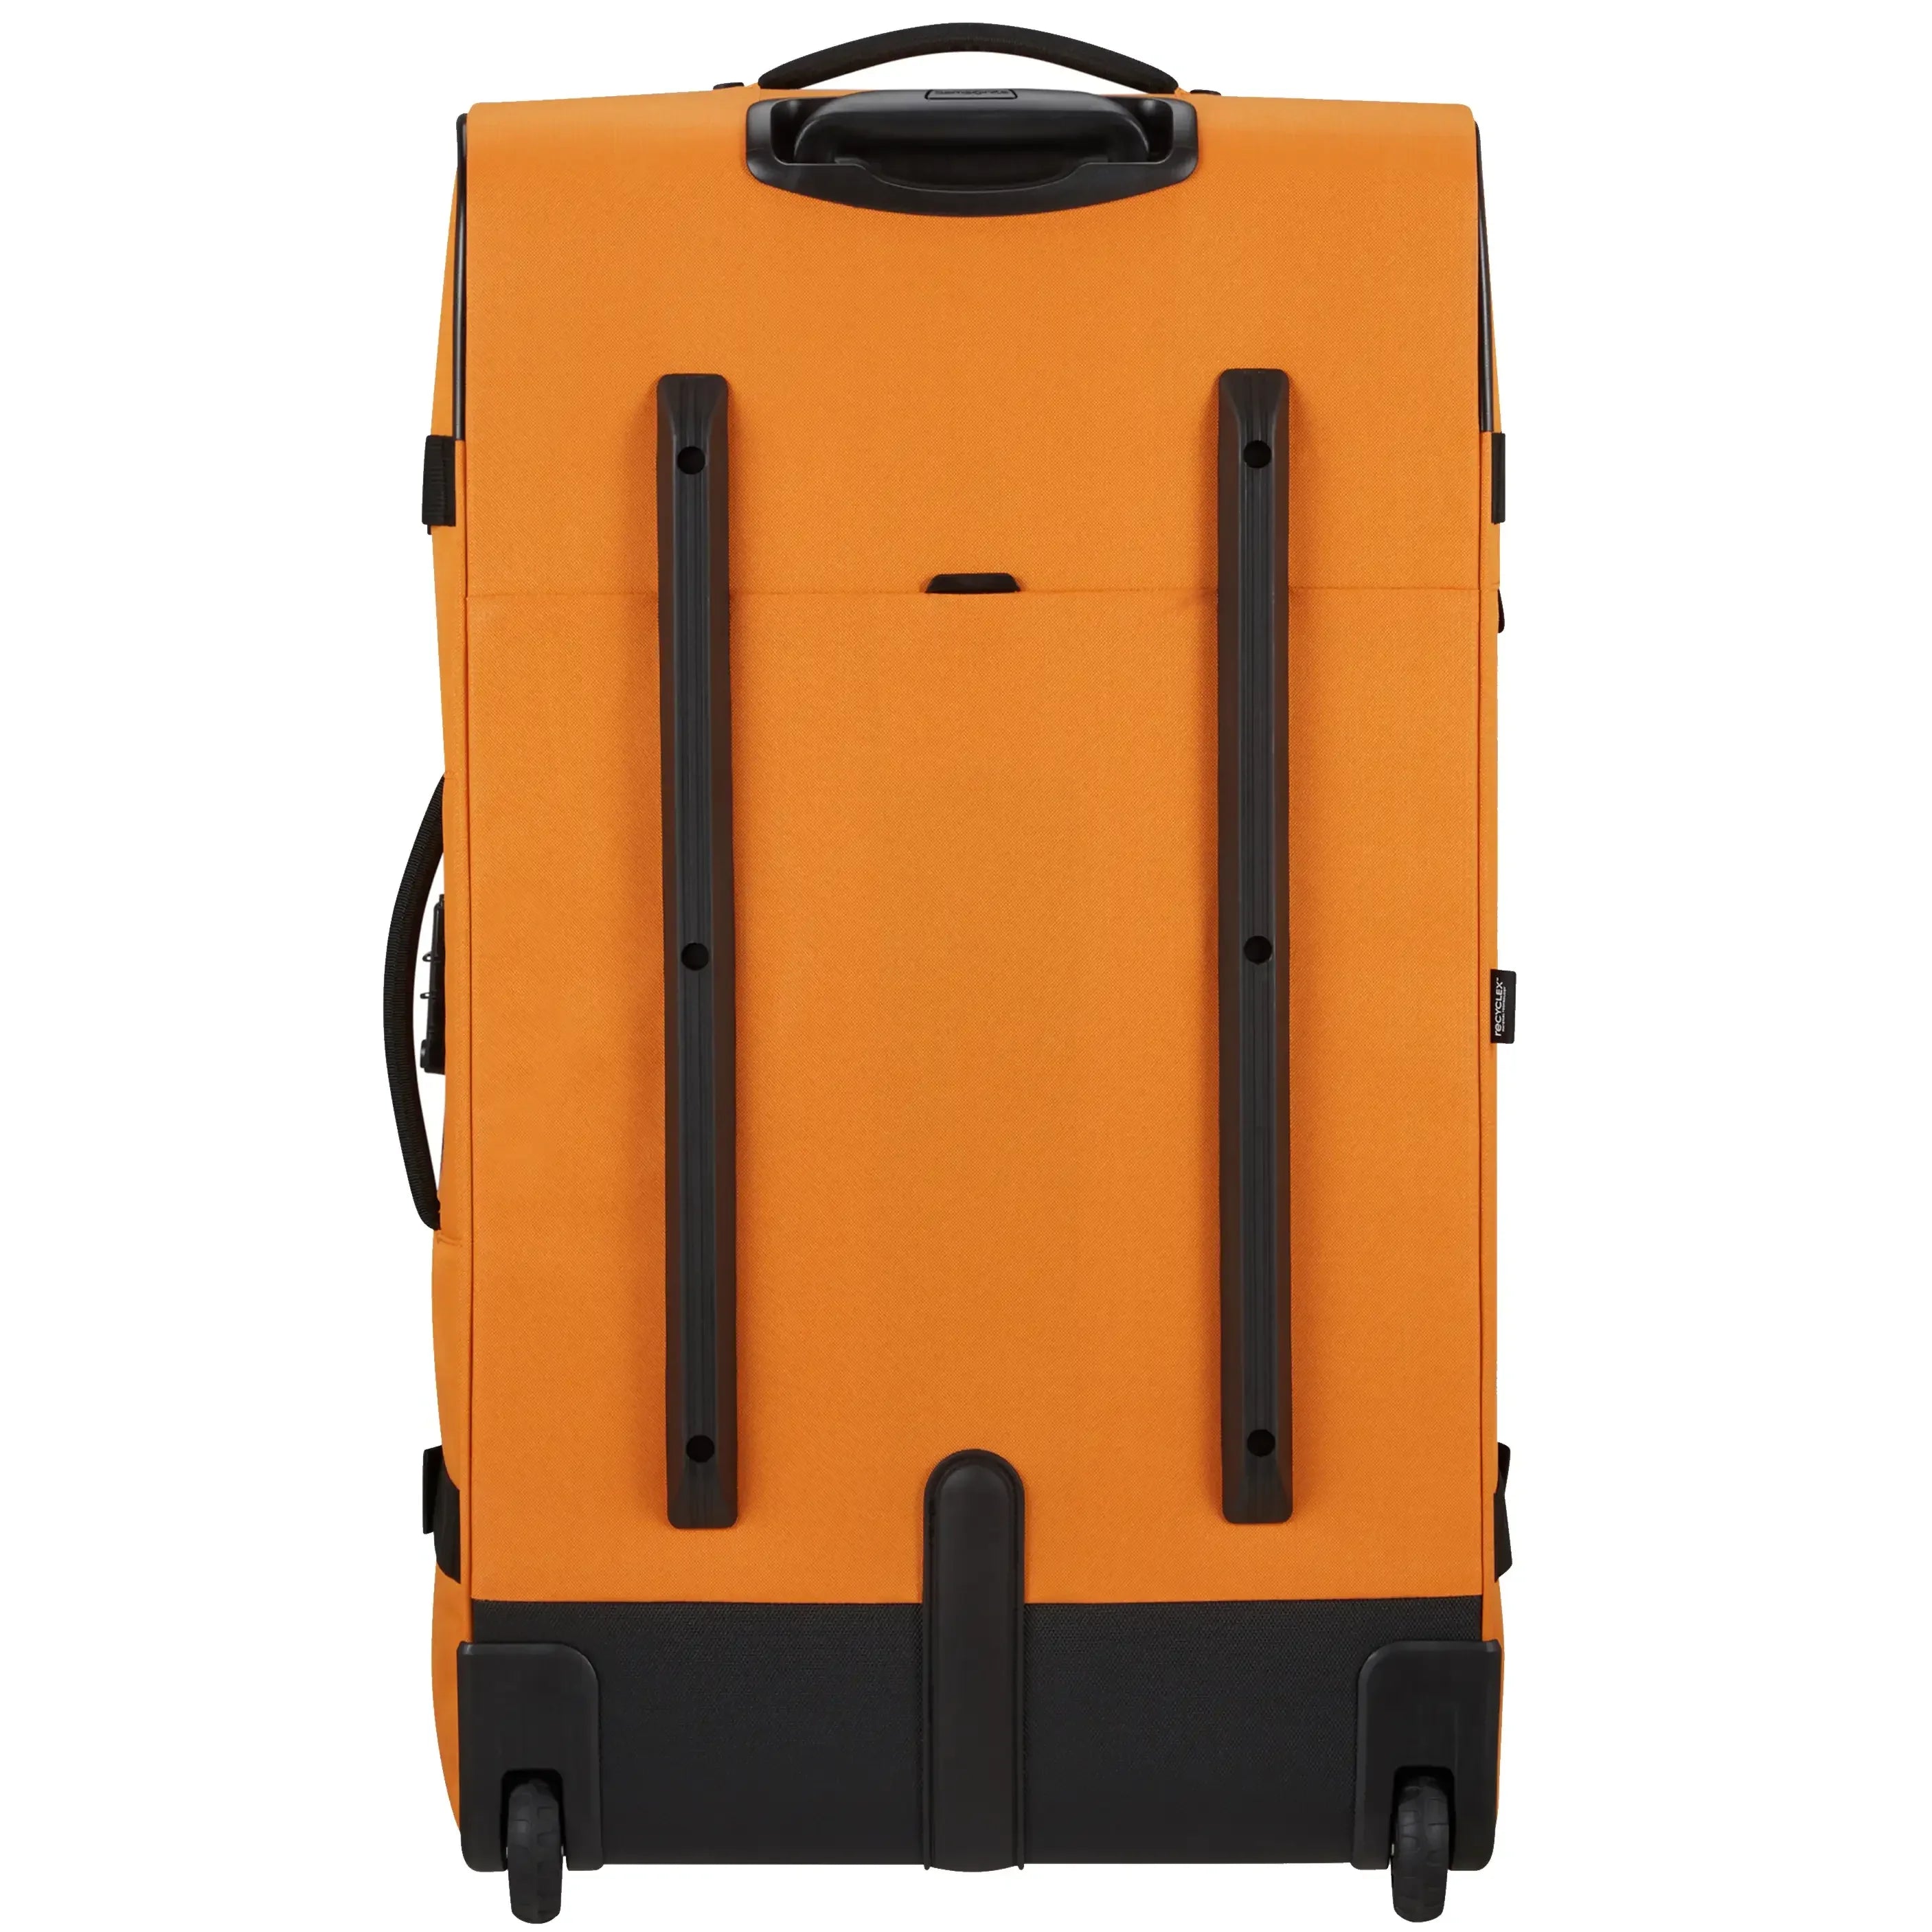 Samsonite Roader rolling travel bag 79 cm - radiant yellow